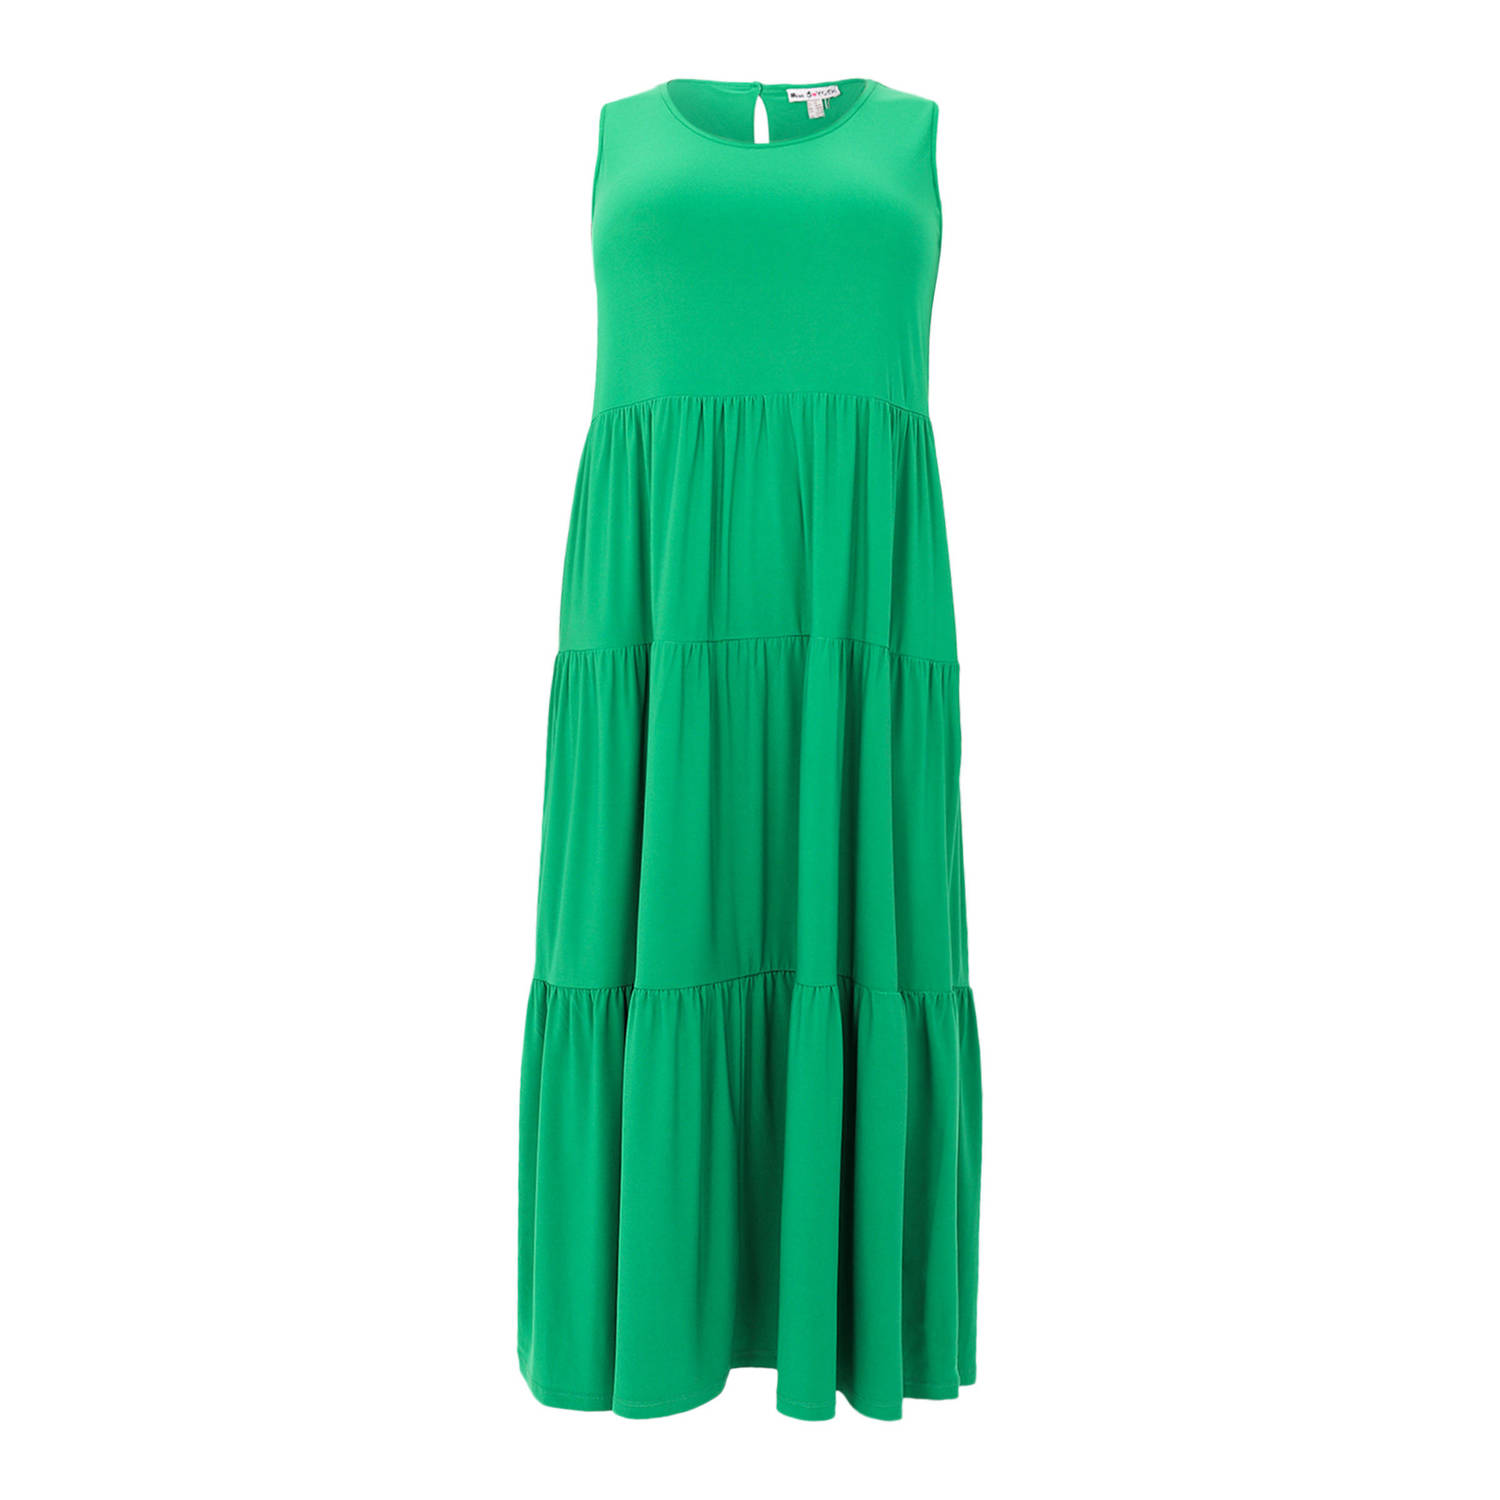 Yoek maxi A-lijn jurk groen